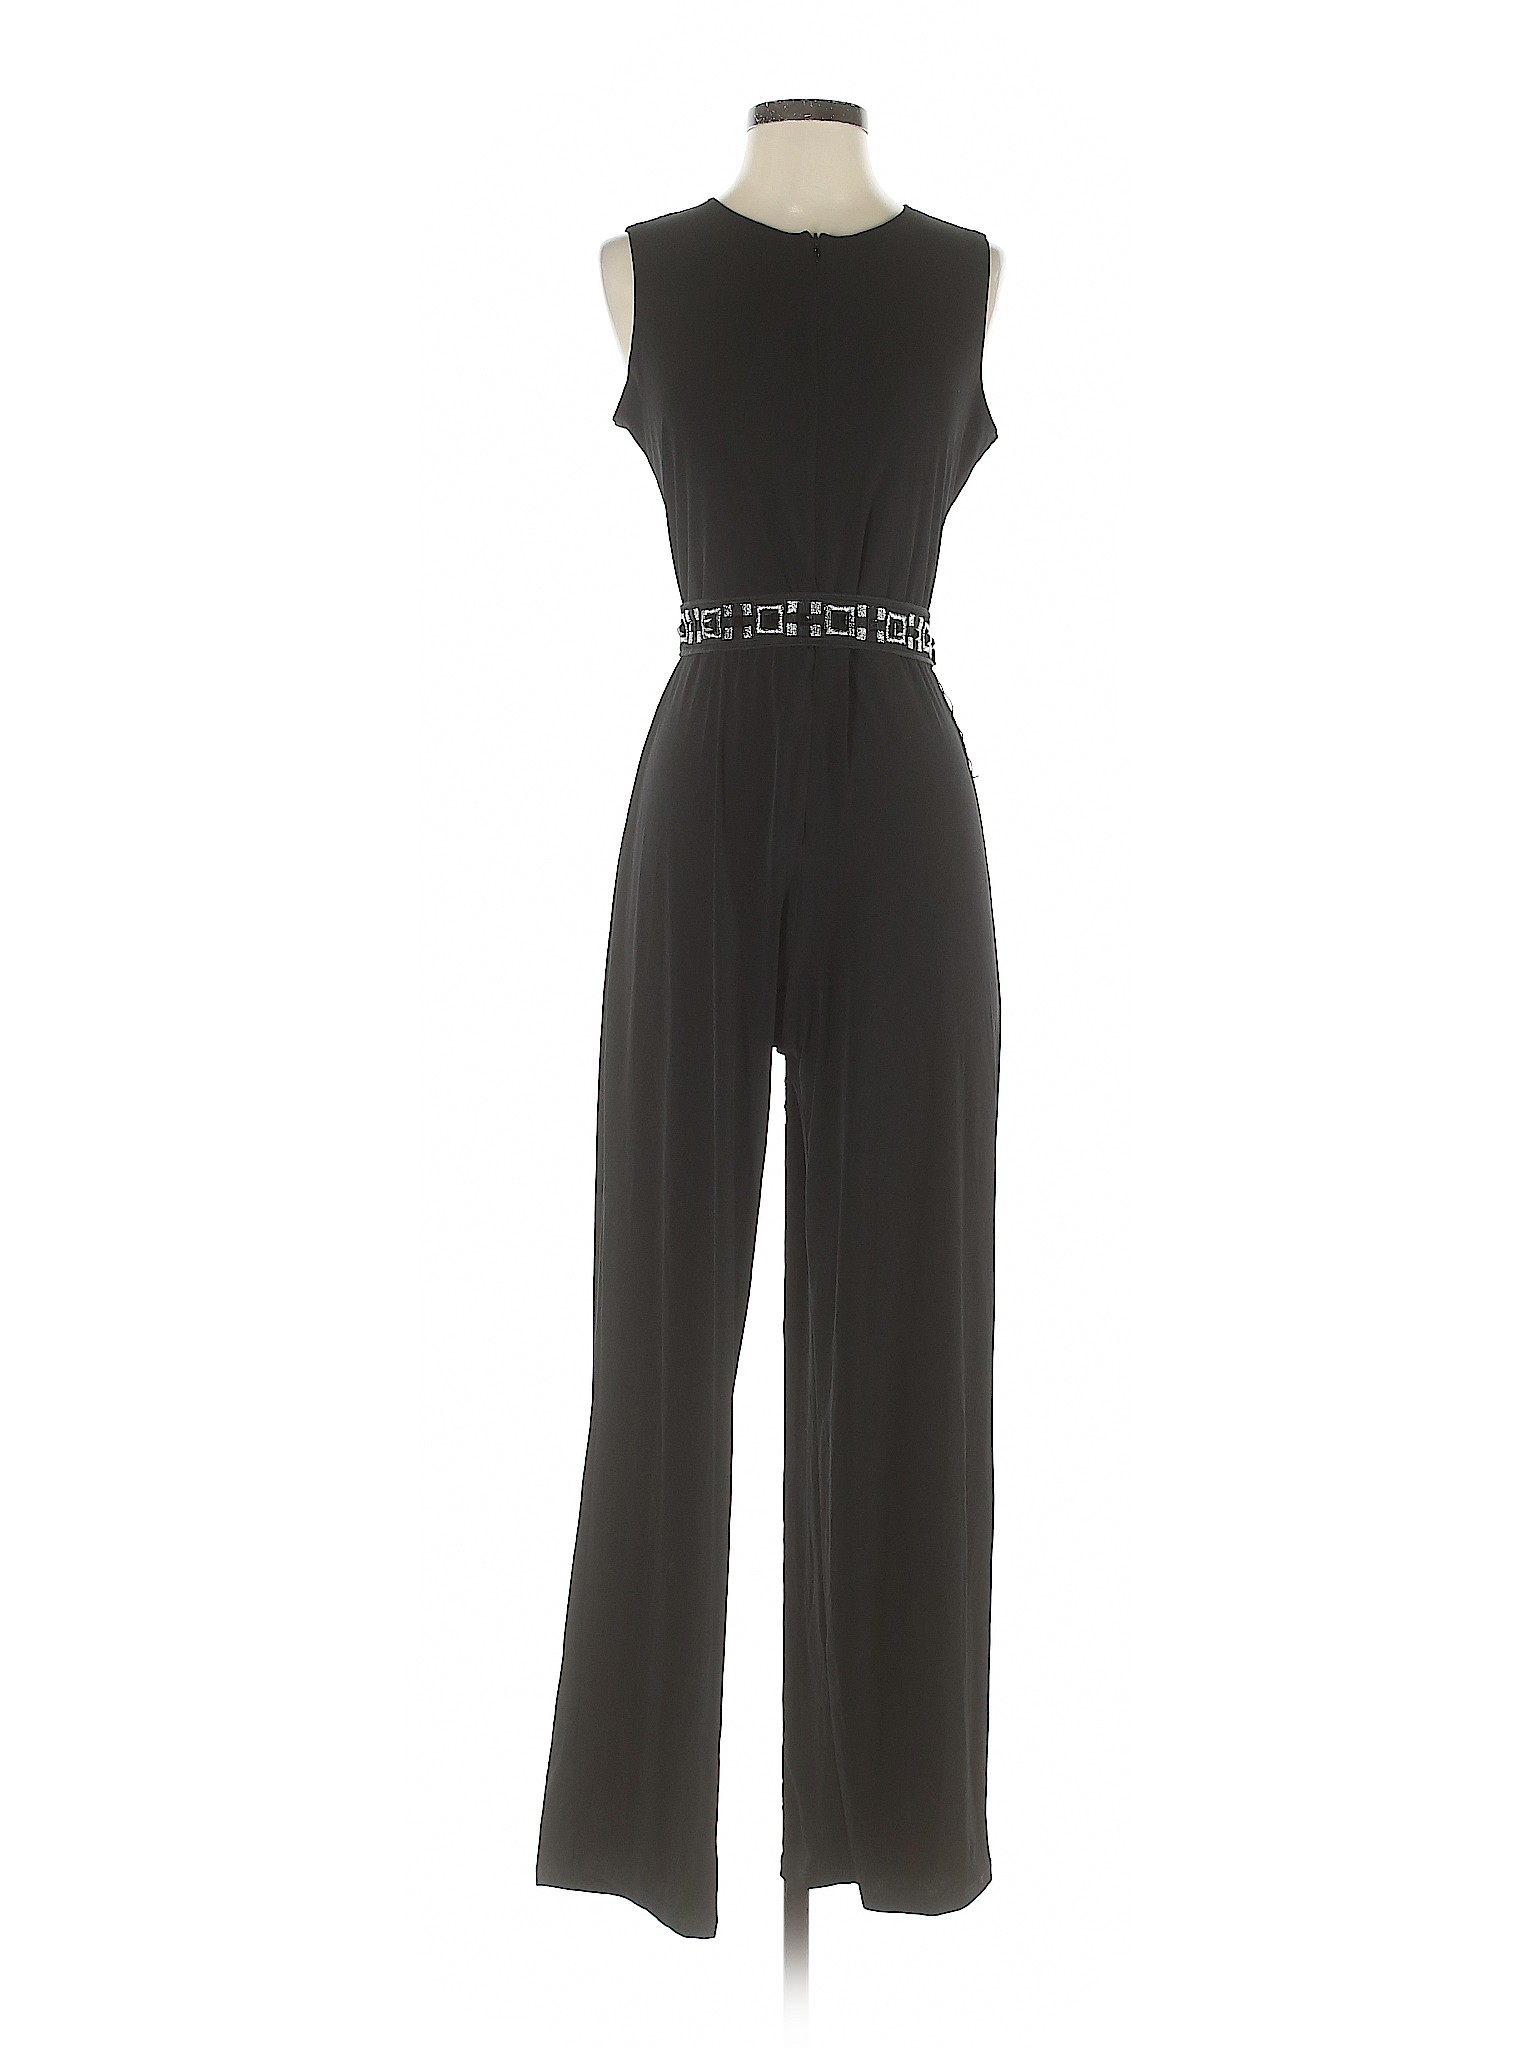 Tiana B. Solid Black Jumpsuit Size S - 64% off | ThredUp